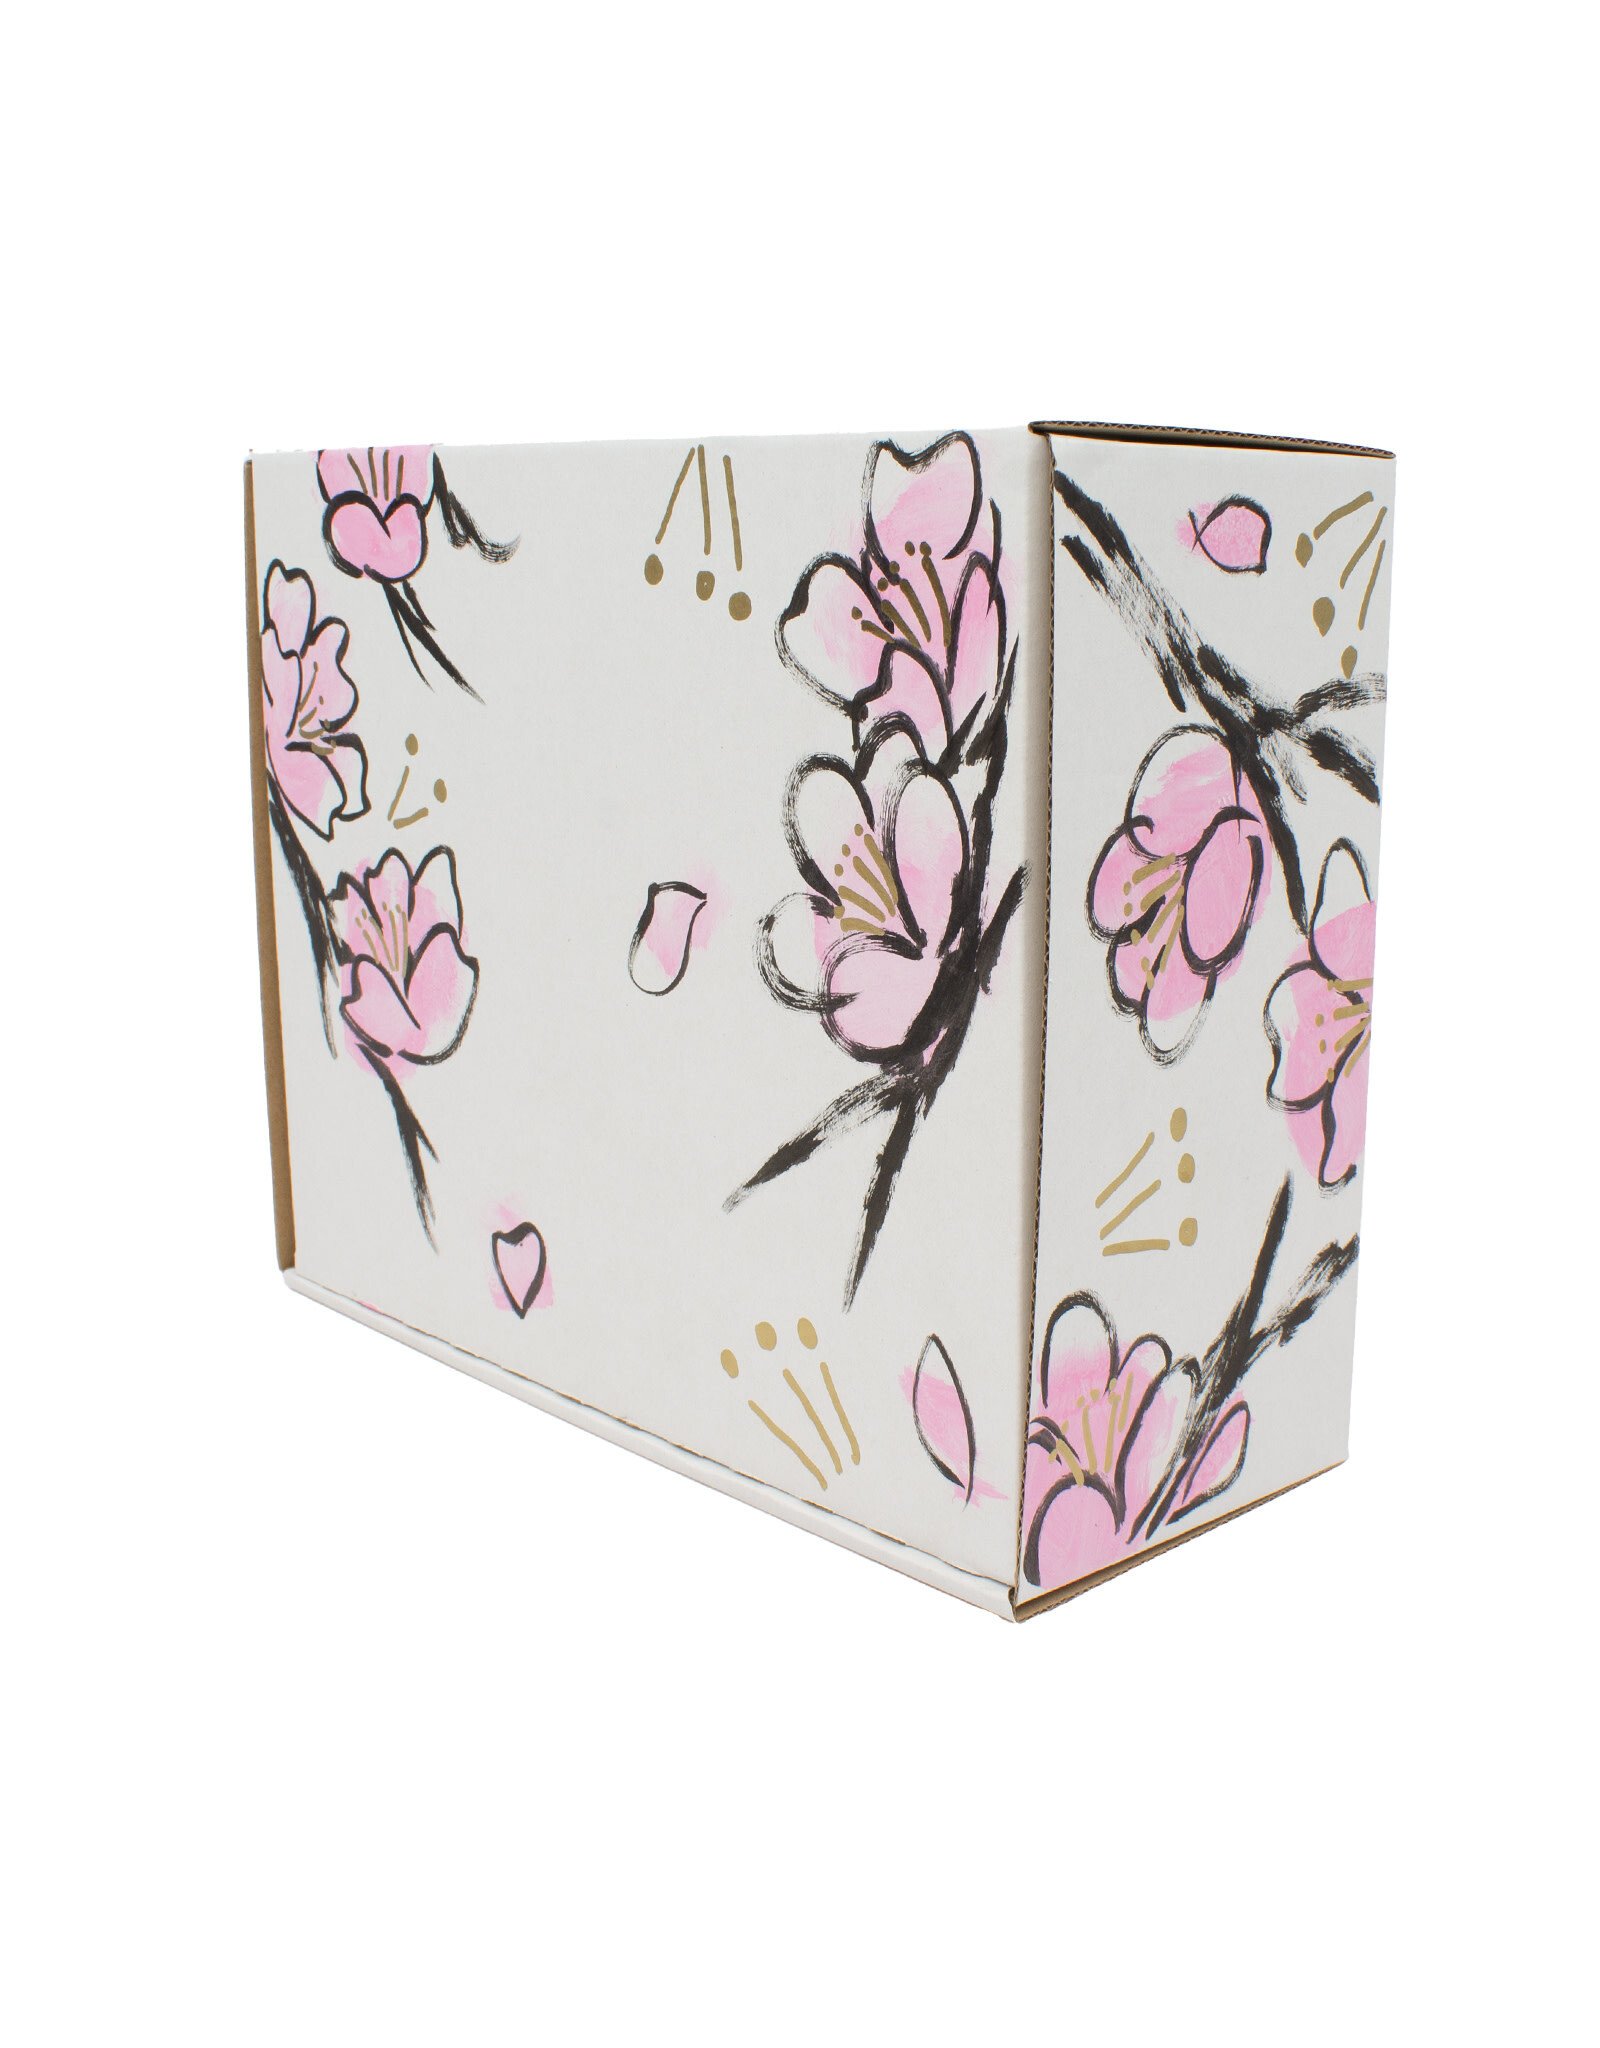 Sara's Sakura Box (Preorder Details in Description)